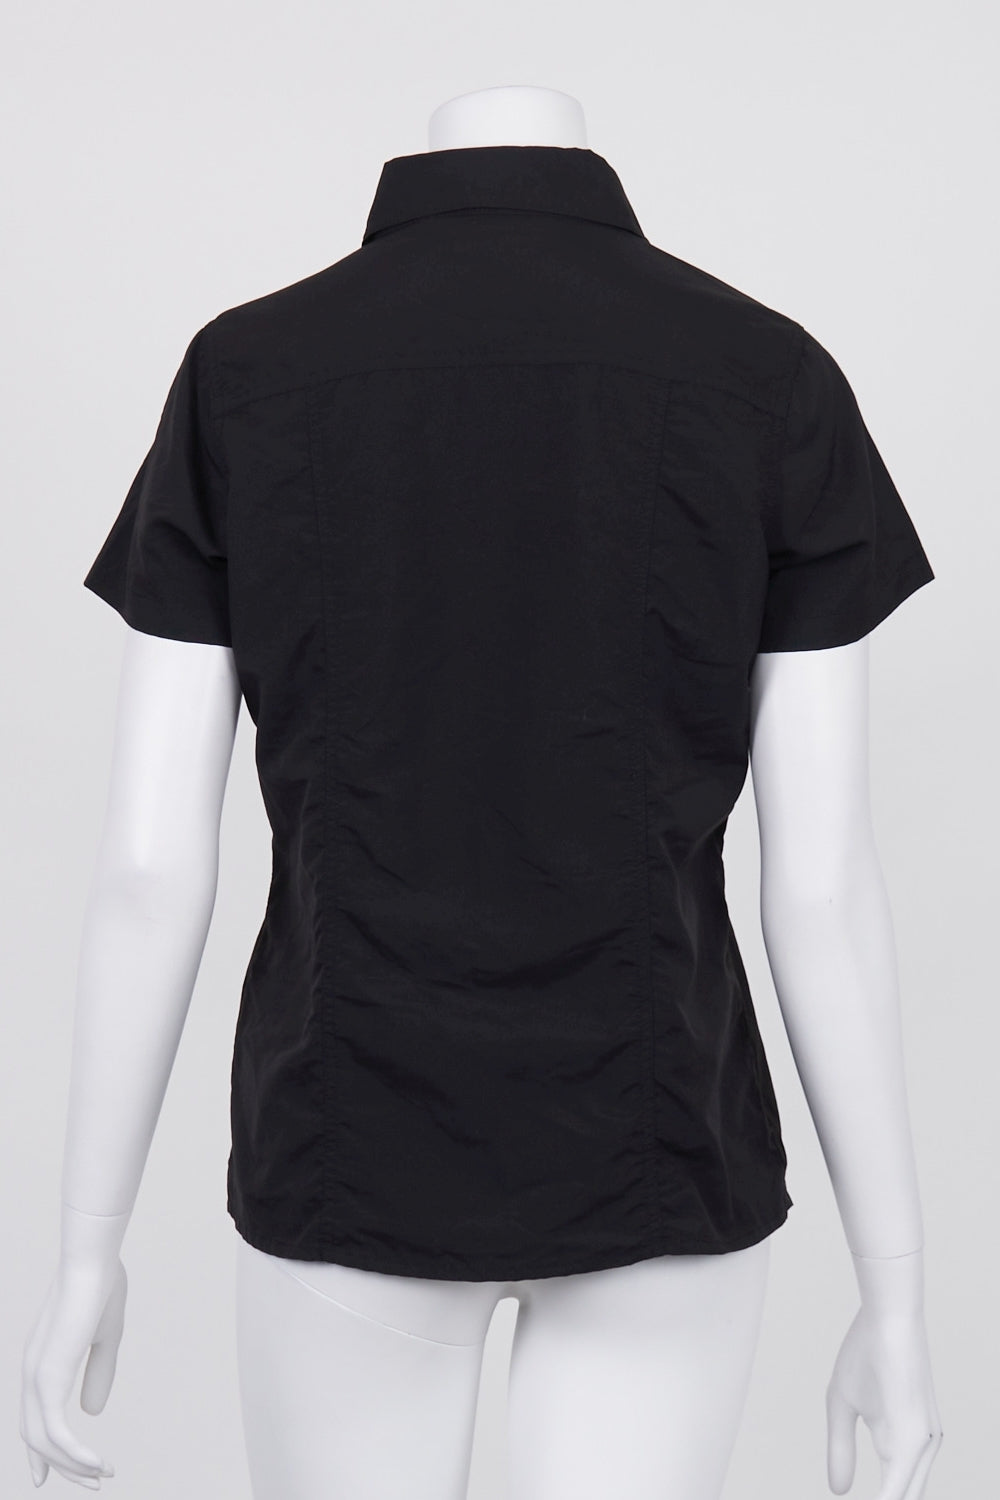 Snowgum Black Short Sleeve Shirt 10